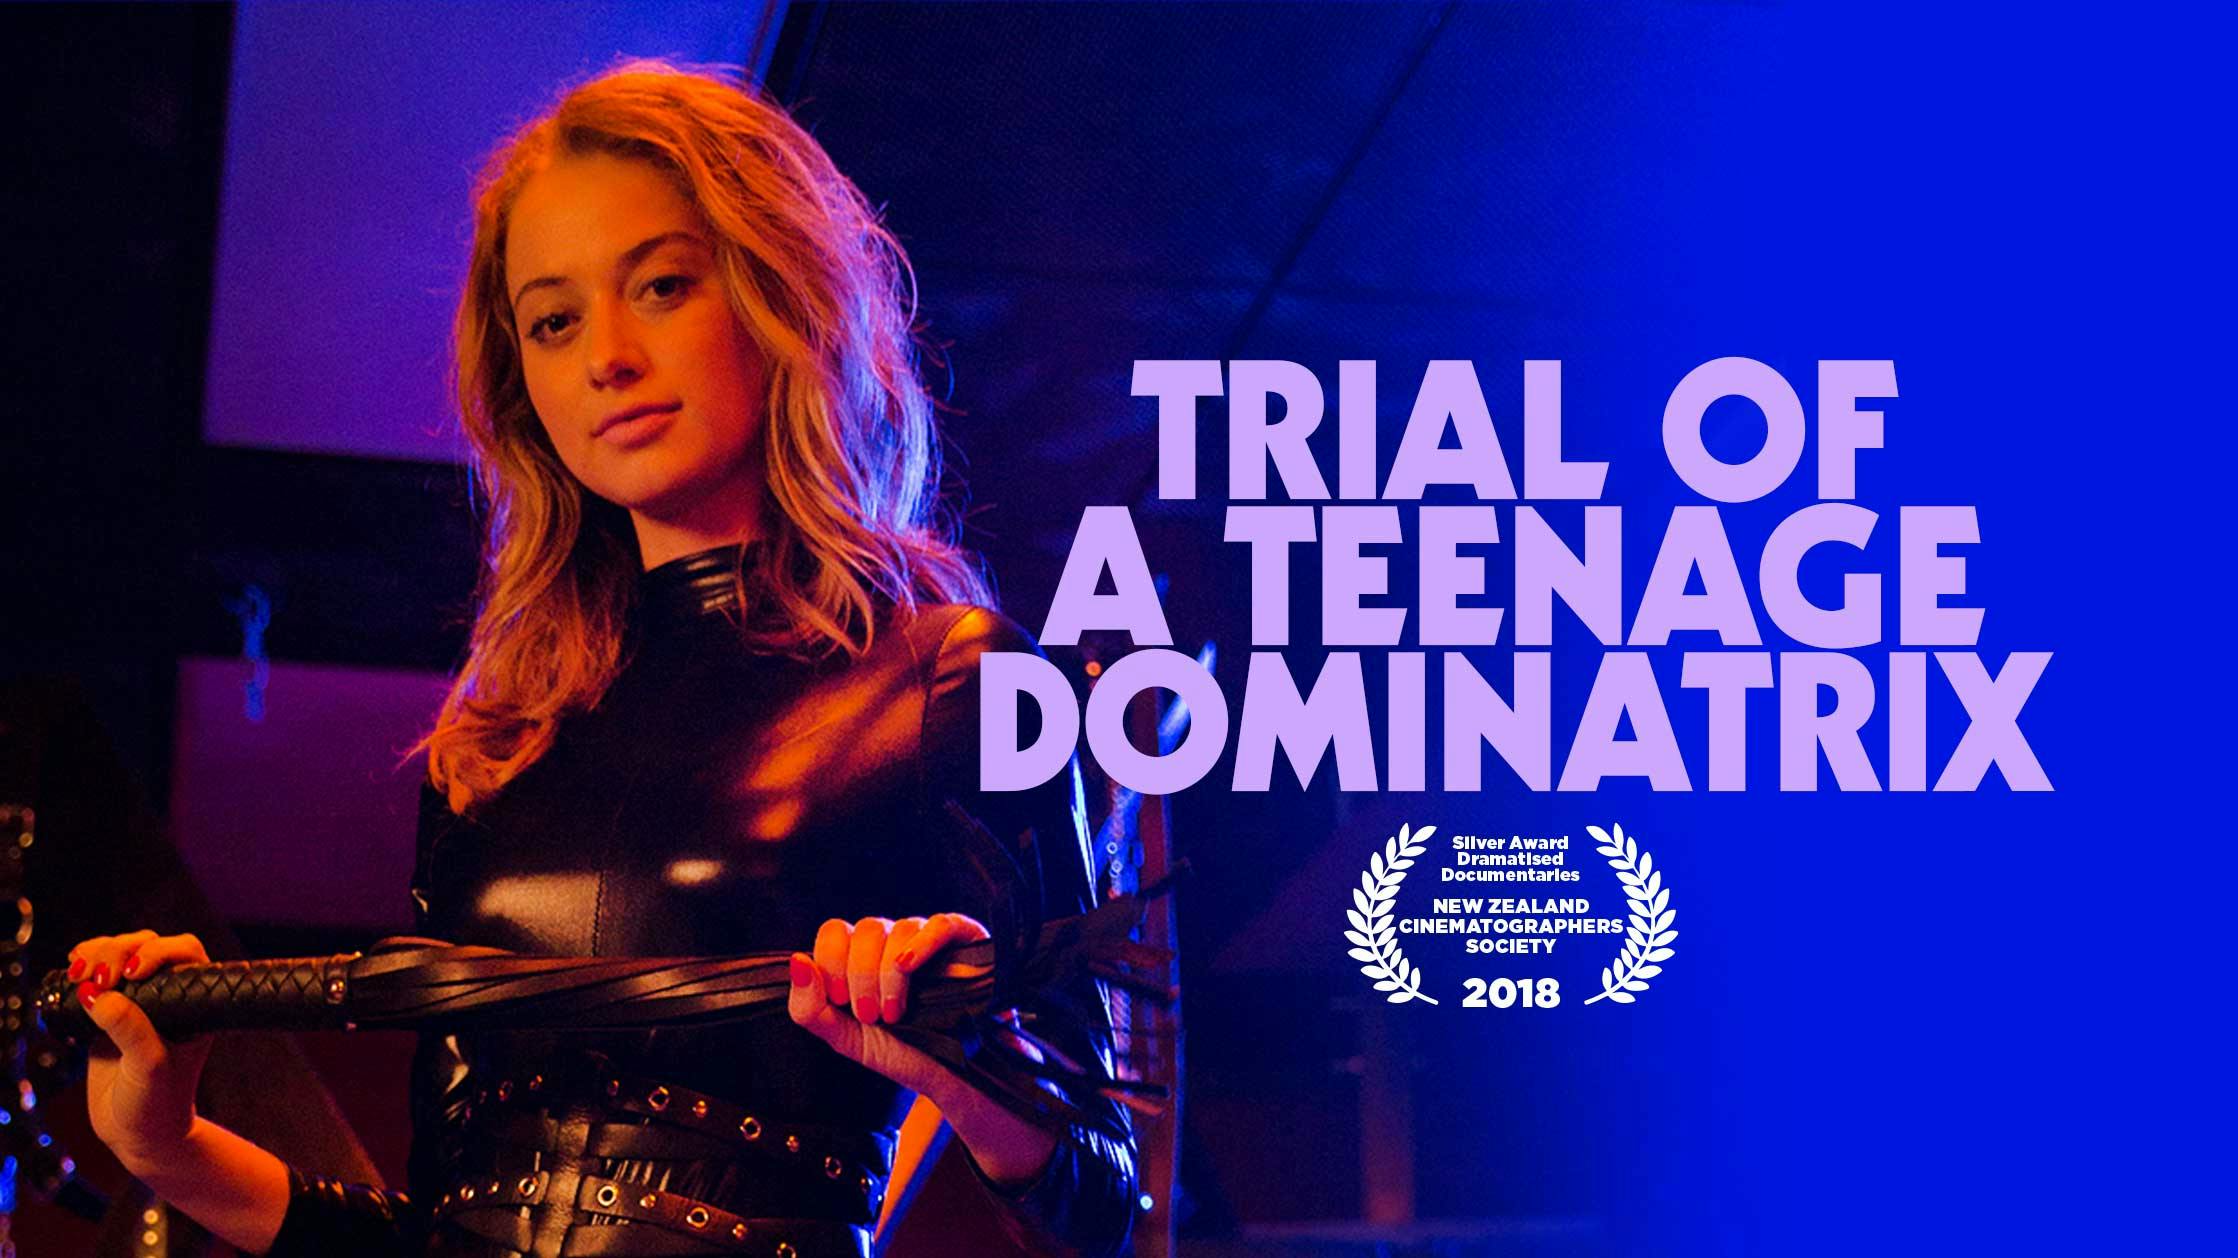 Trial Of A Teenage Dominatrix